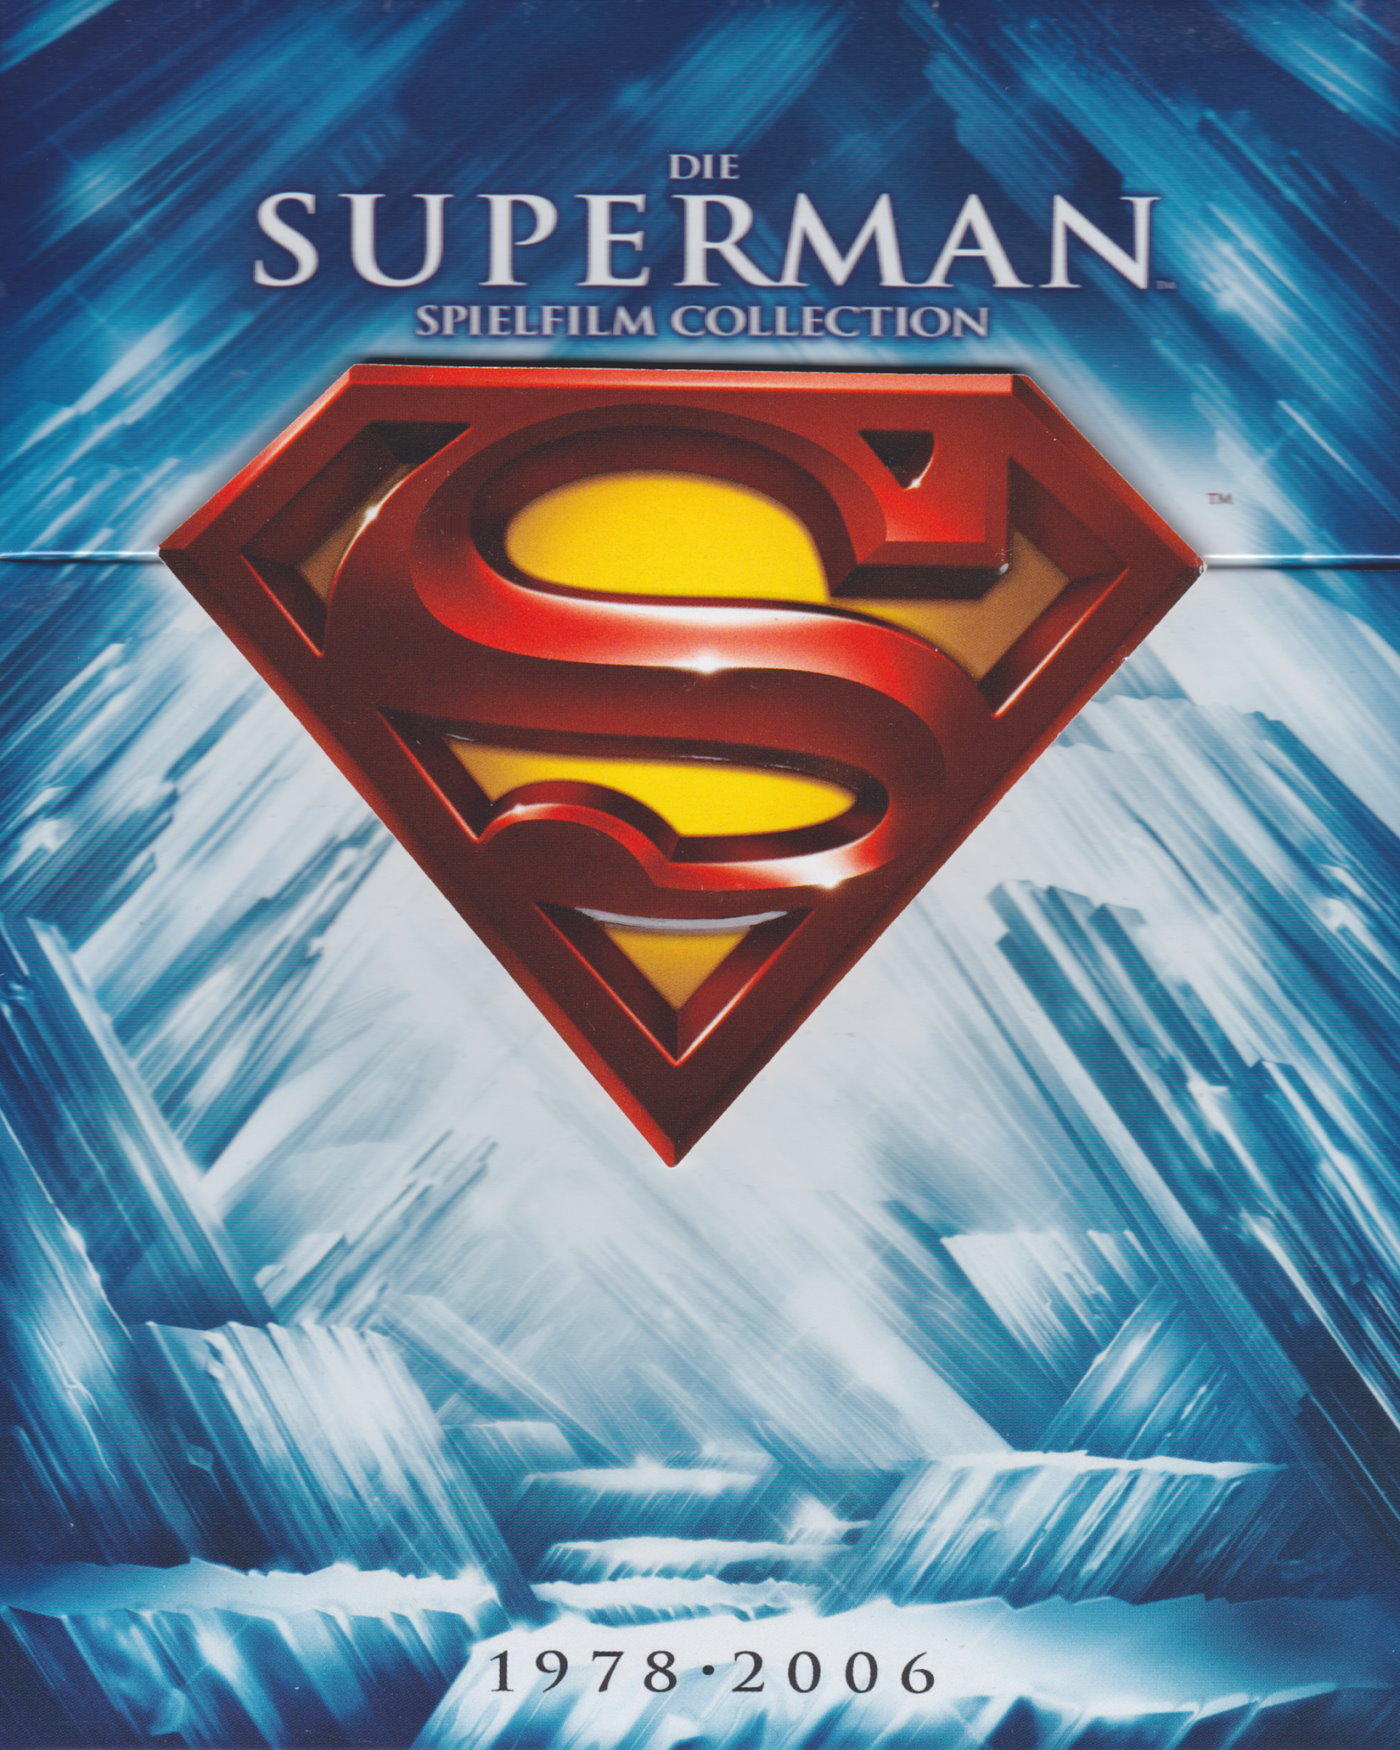 Cover - Superman.jpg